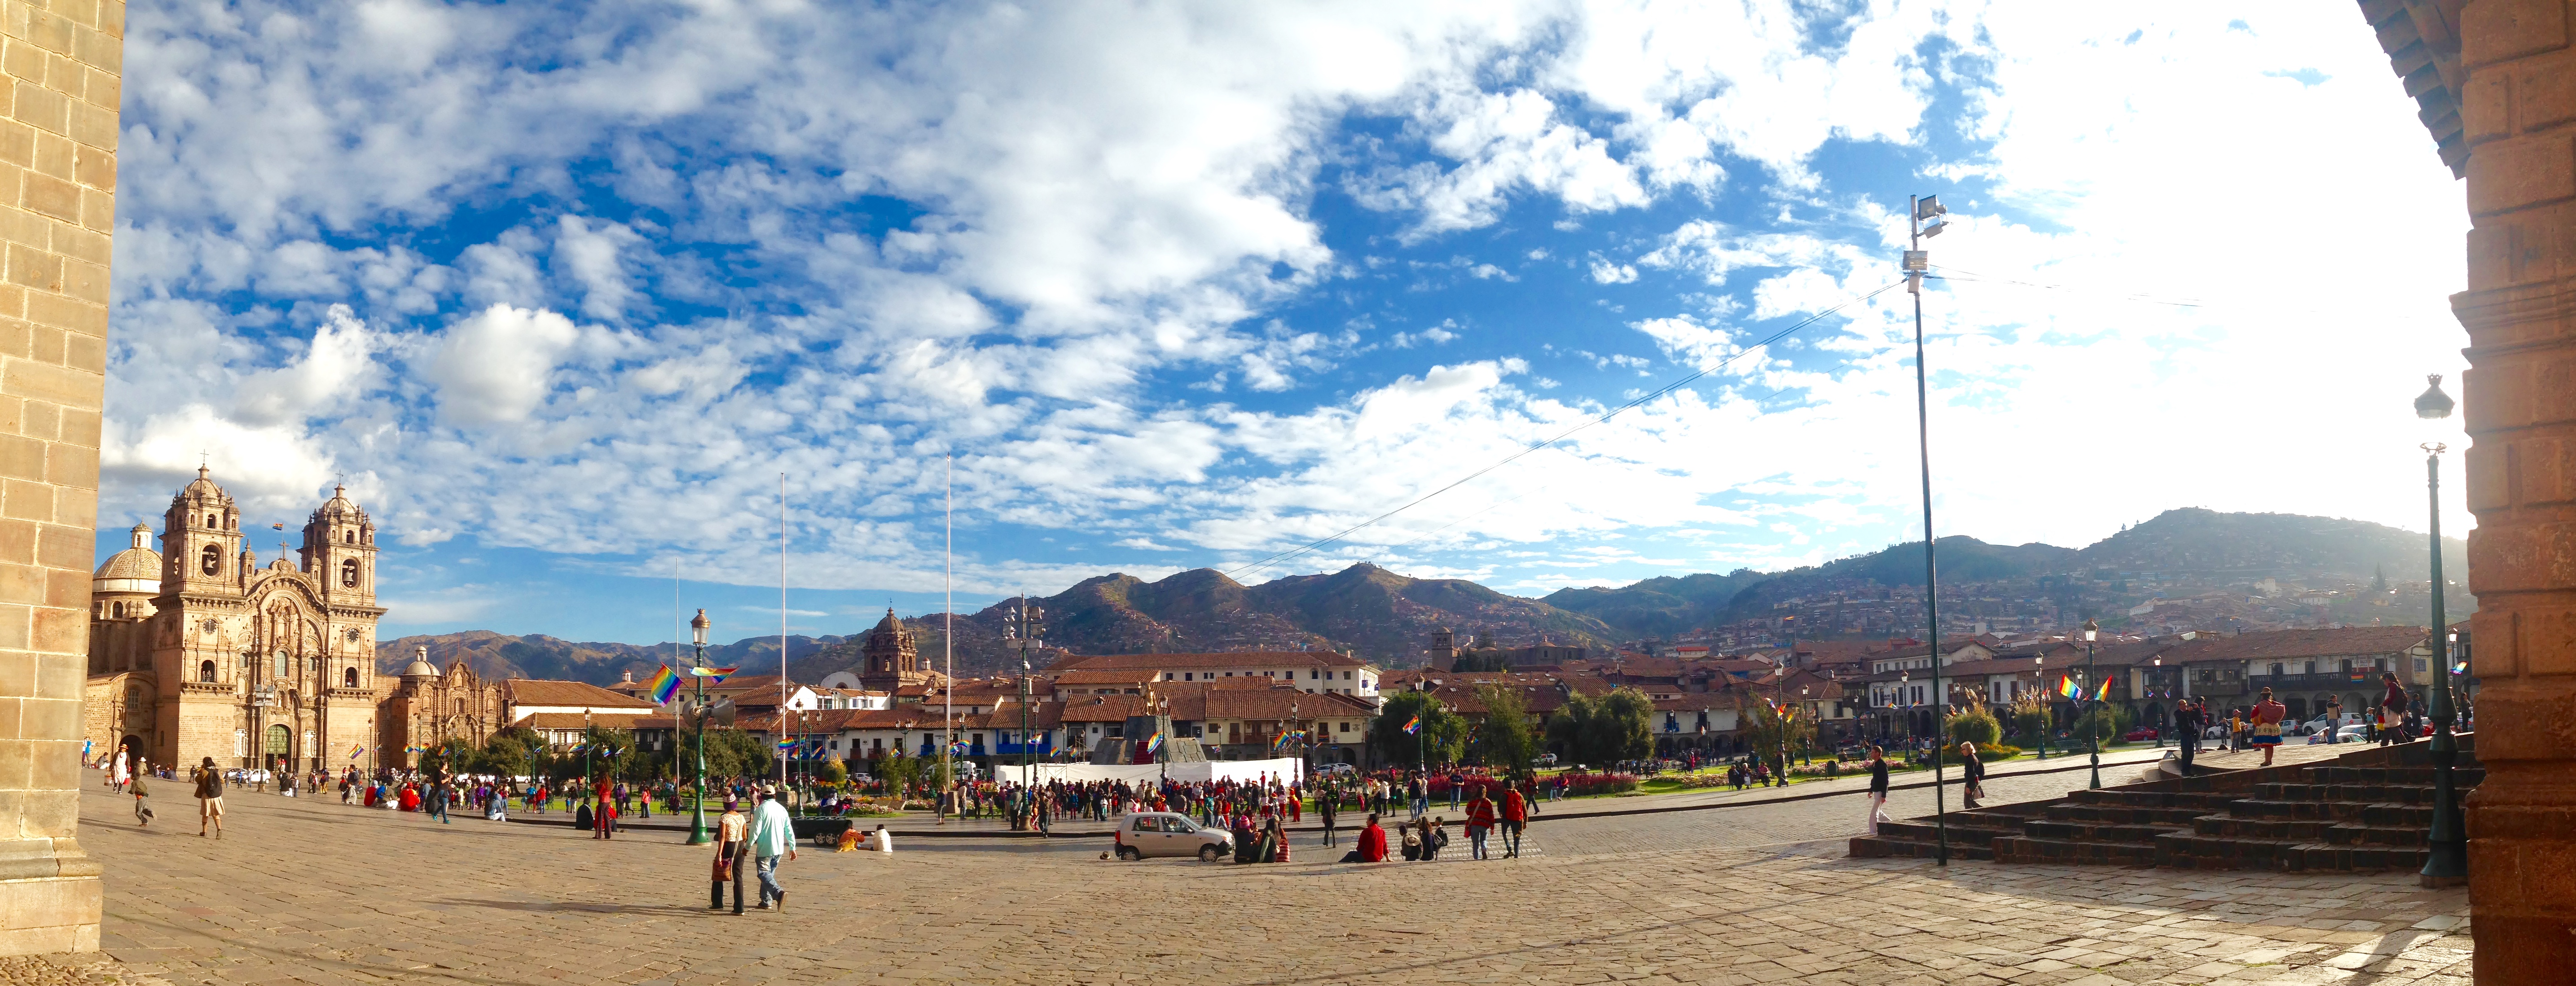 Plaza Armas Cuzco panorama